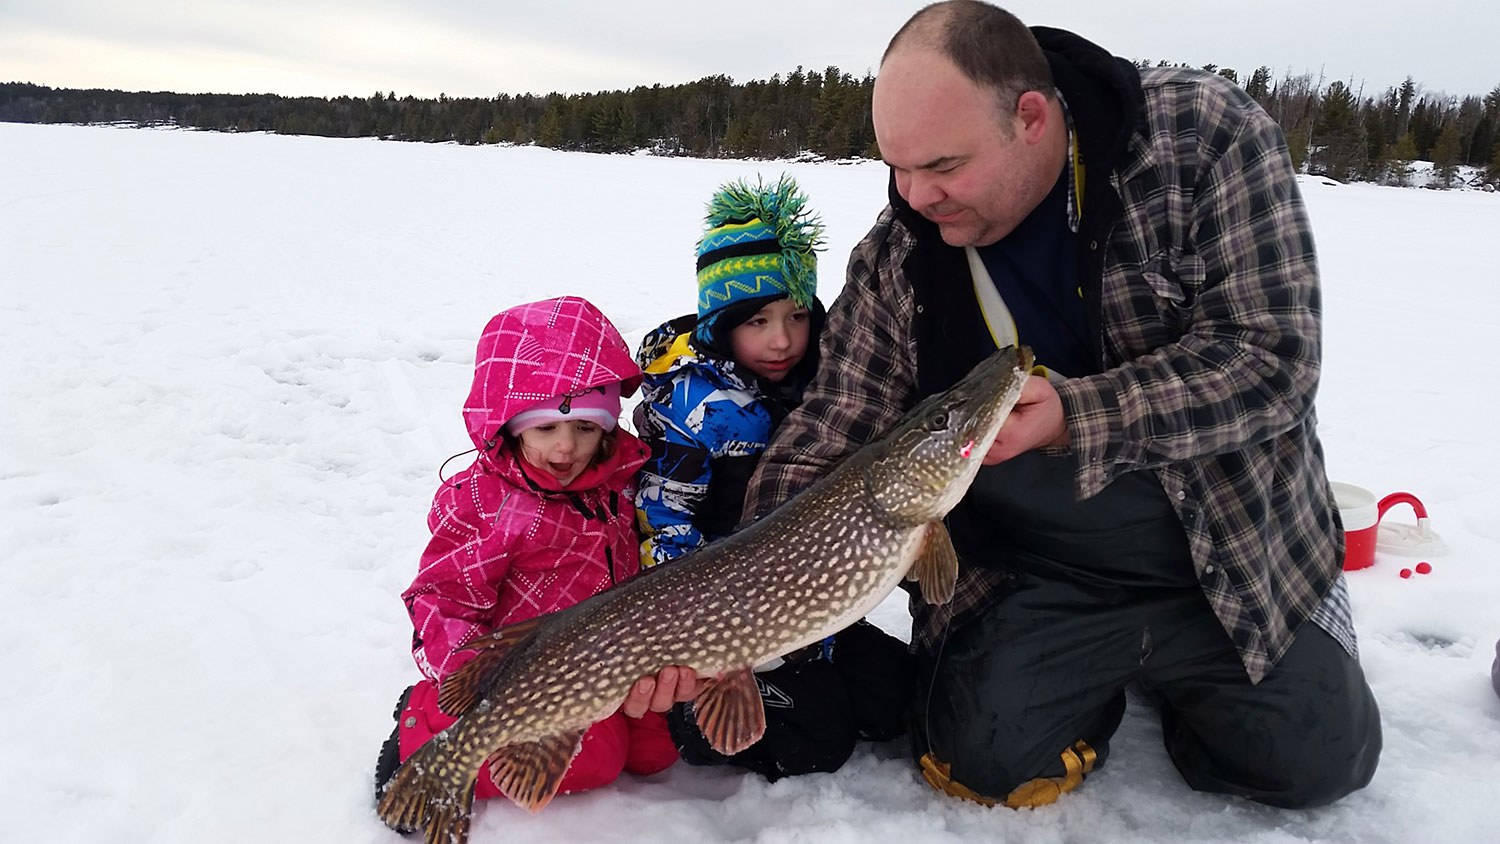 Brian Tucker on Rainy Lake in 2016 with his children. (Photo: Brian Tucker)